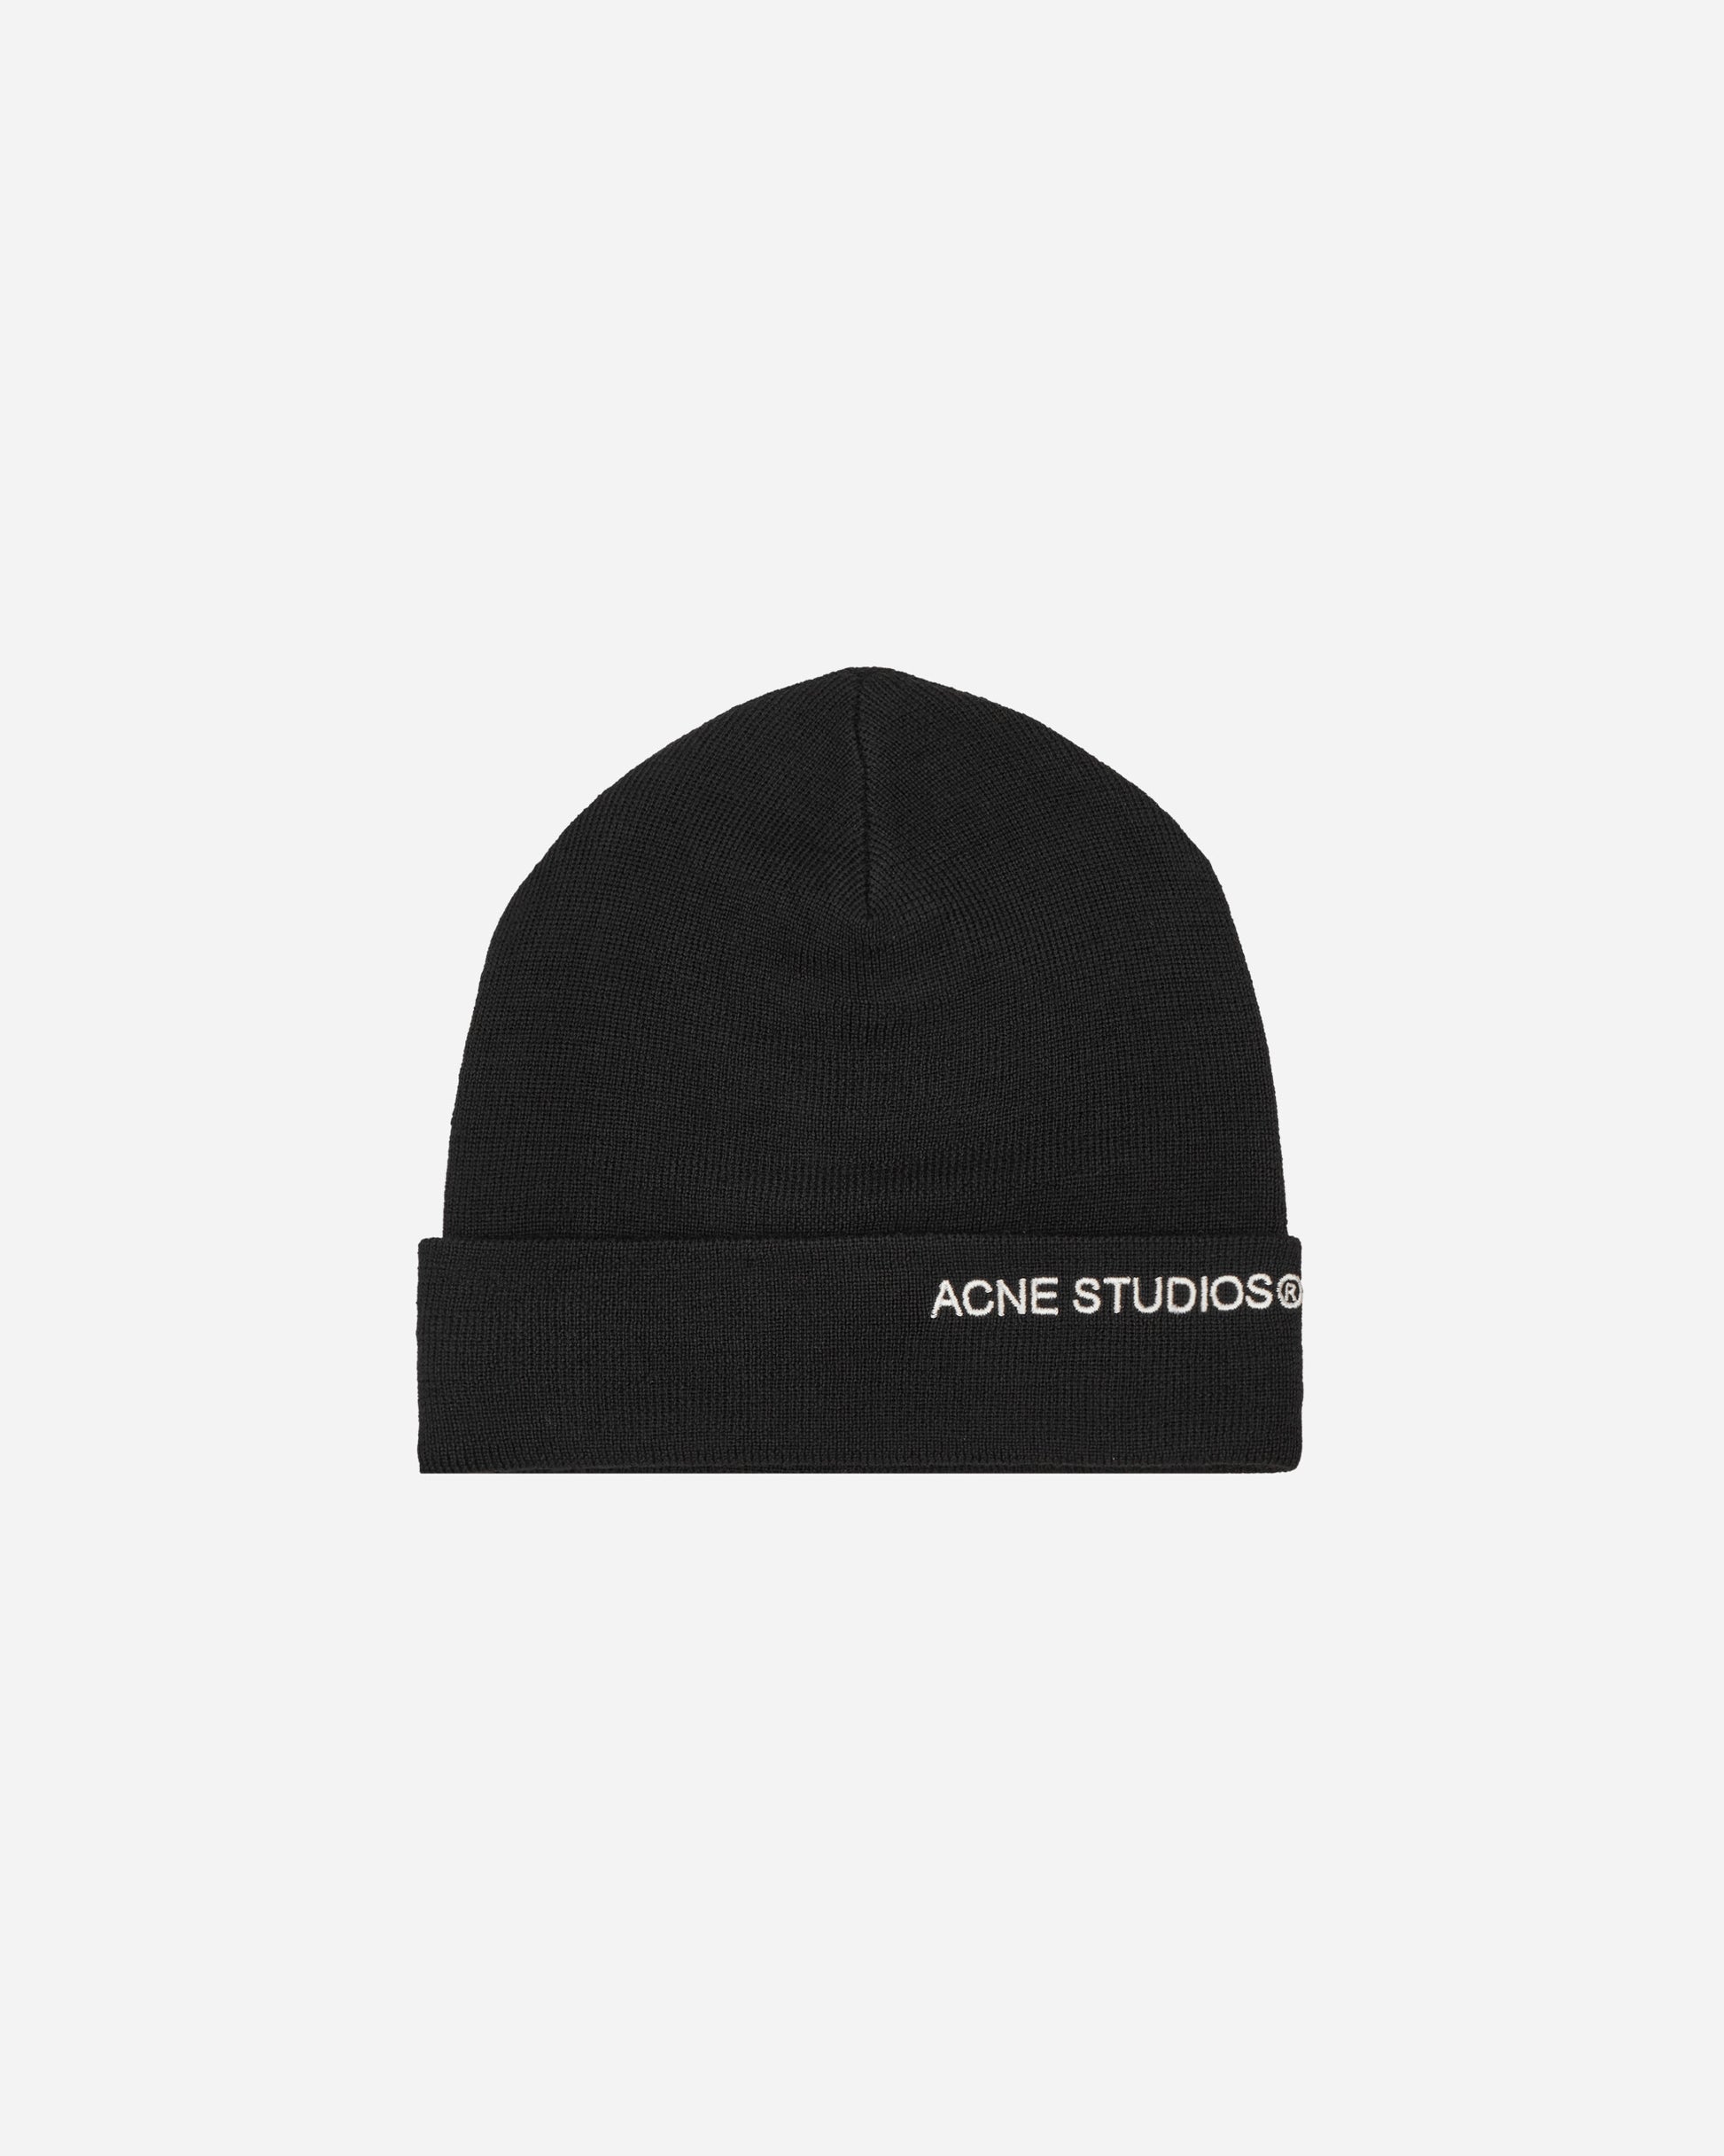 Acne Studios Beanie Black Hats Beanies C40334- 900